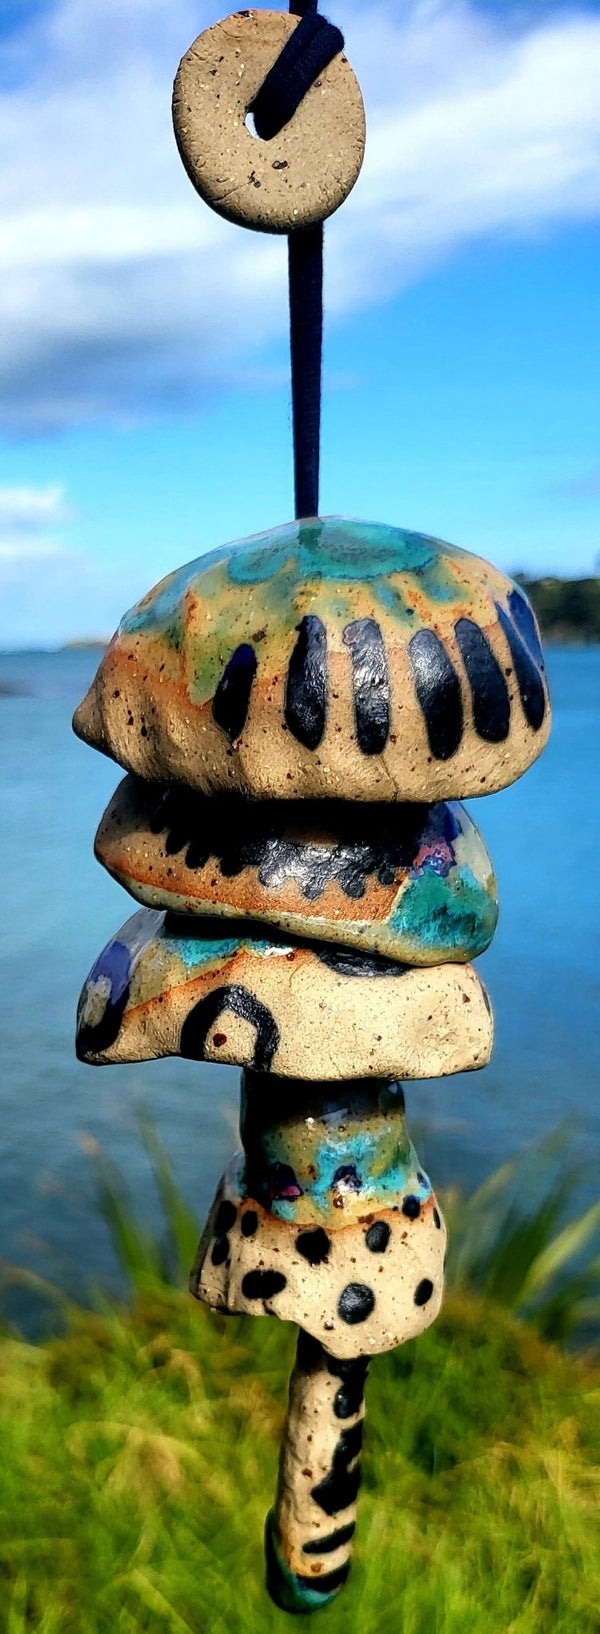 Handmade Ceramic Bells | Chimes 🔔 - Artoon